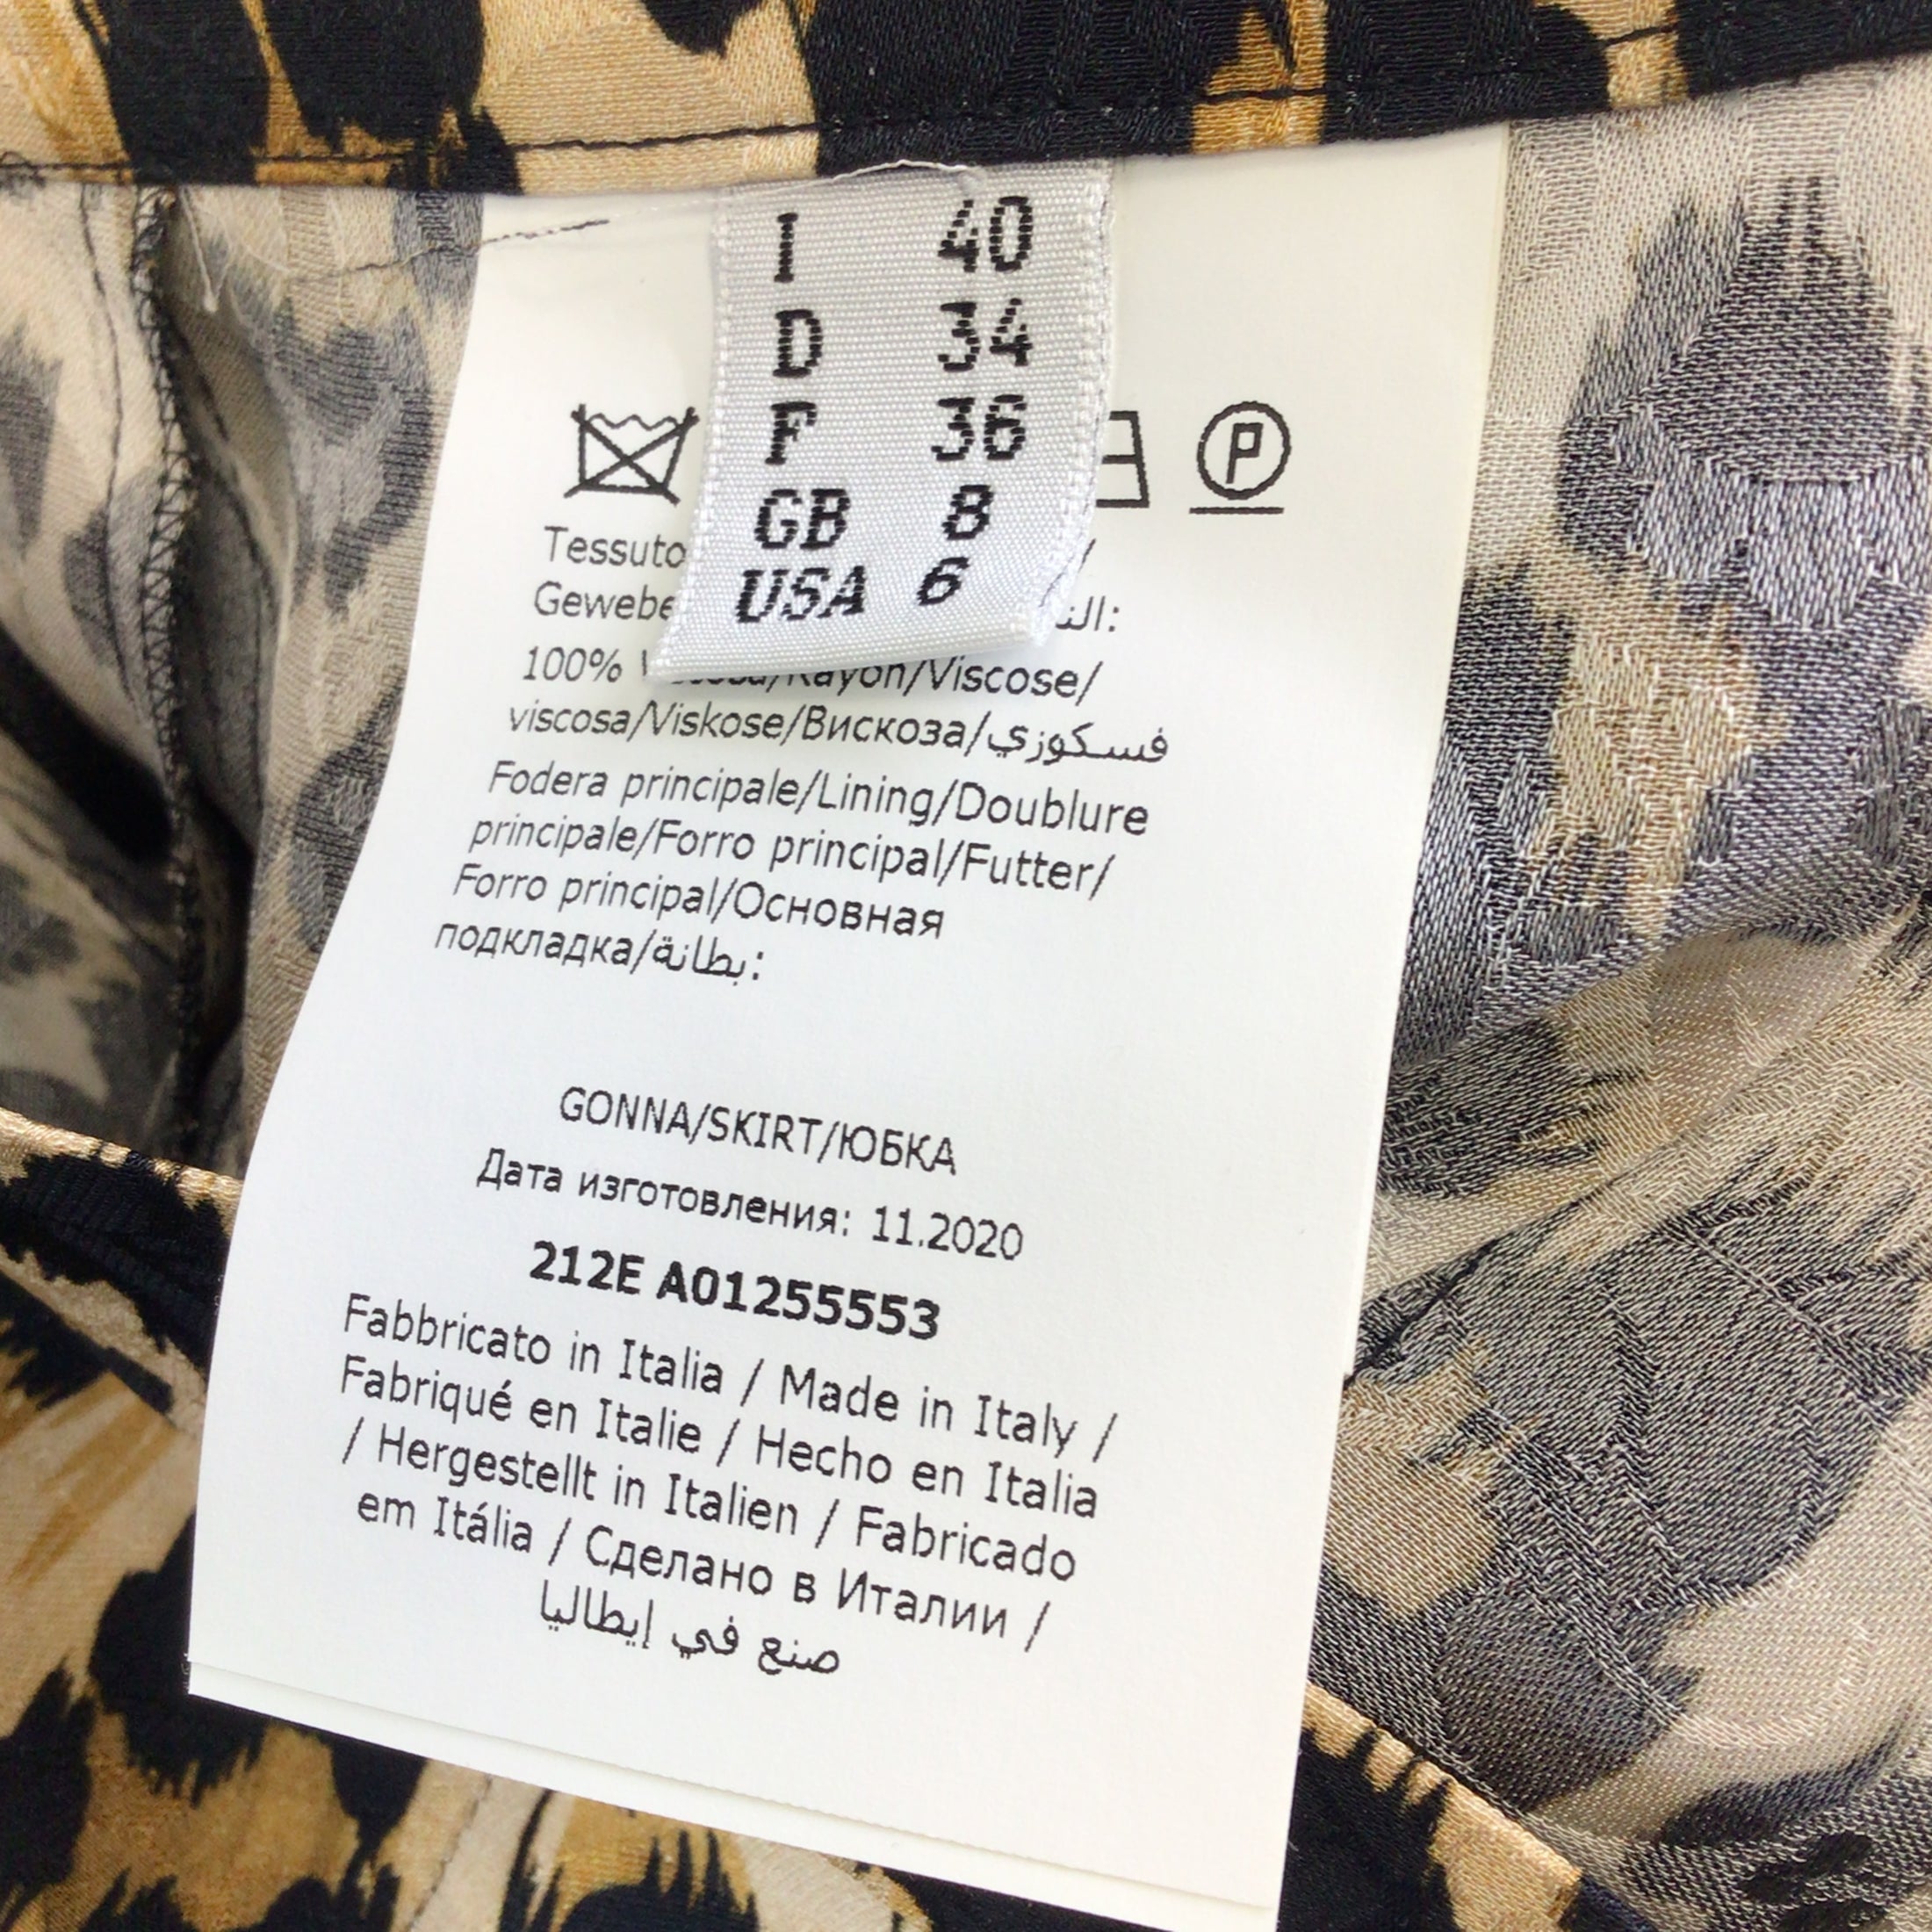 Moschino Tan / Black Leopard Printed Crepe Skirt